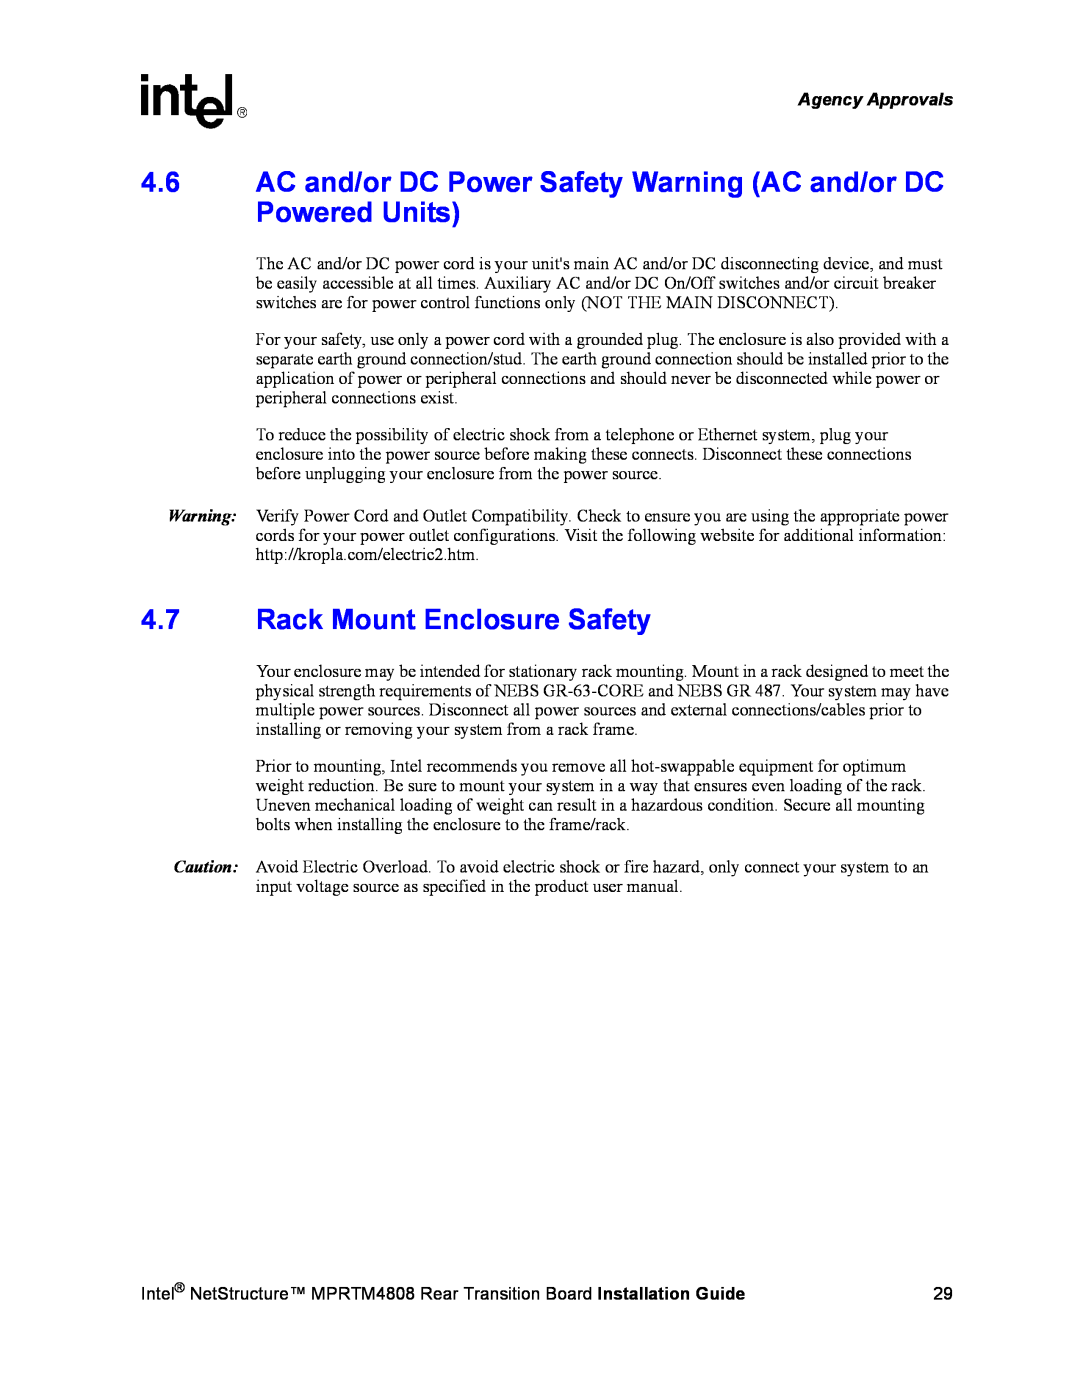 Intel MPRTM4808 manual 4.7Rack Mount Enclosure Safety, Agency Approvals 